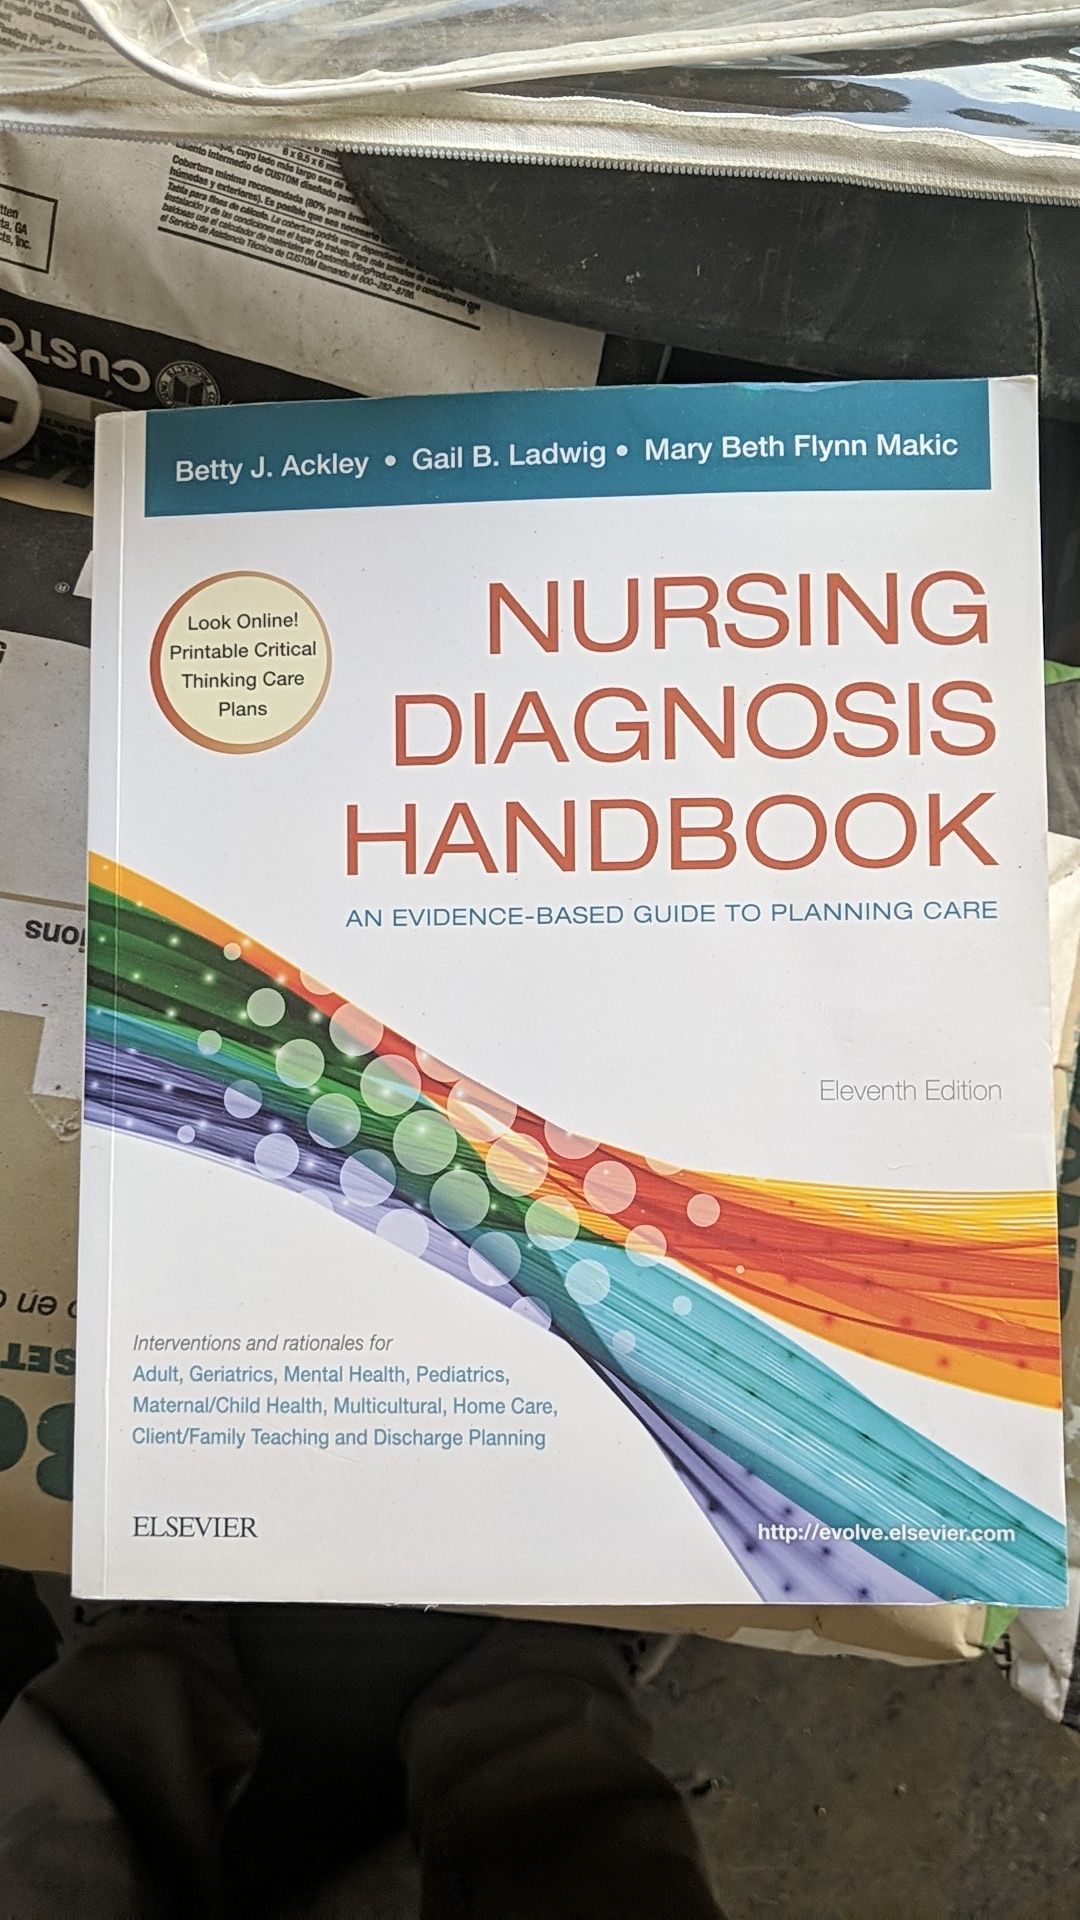 Nursing Diagnosis Handbook - textbook